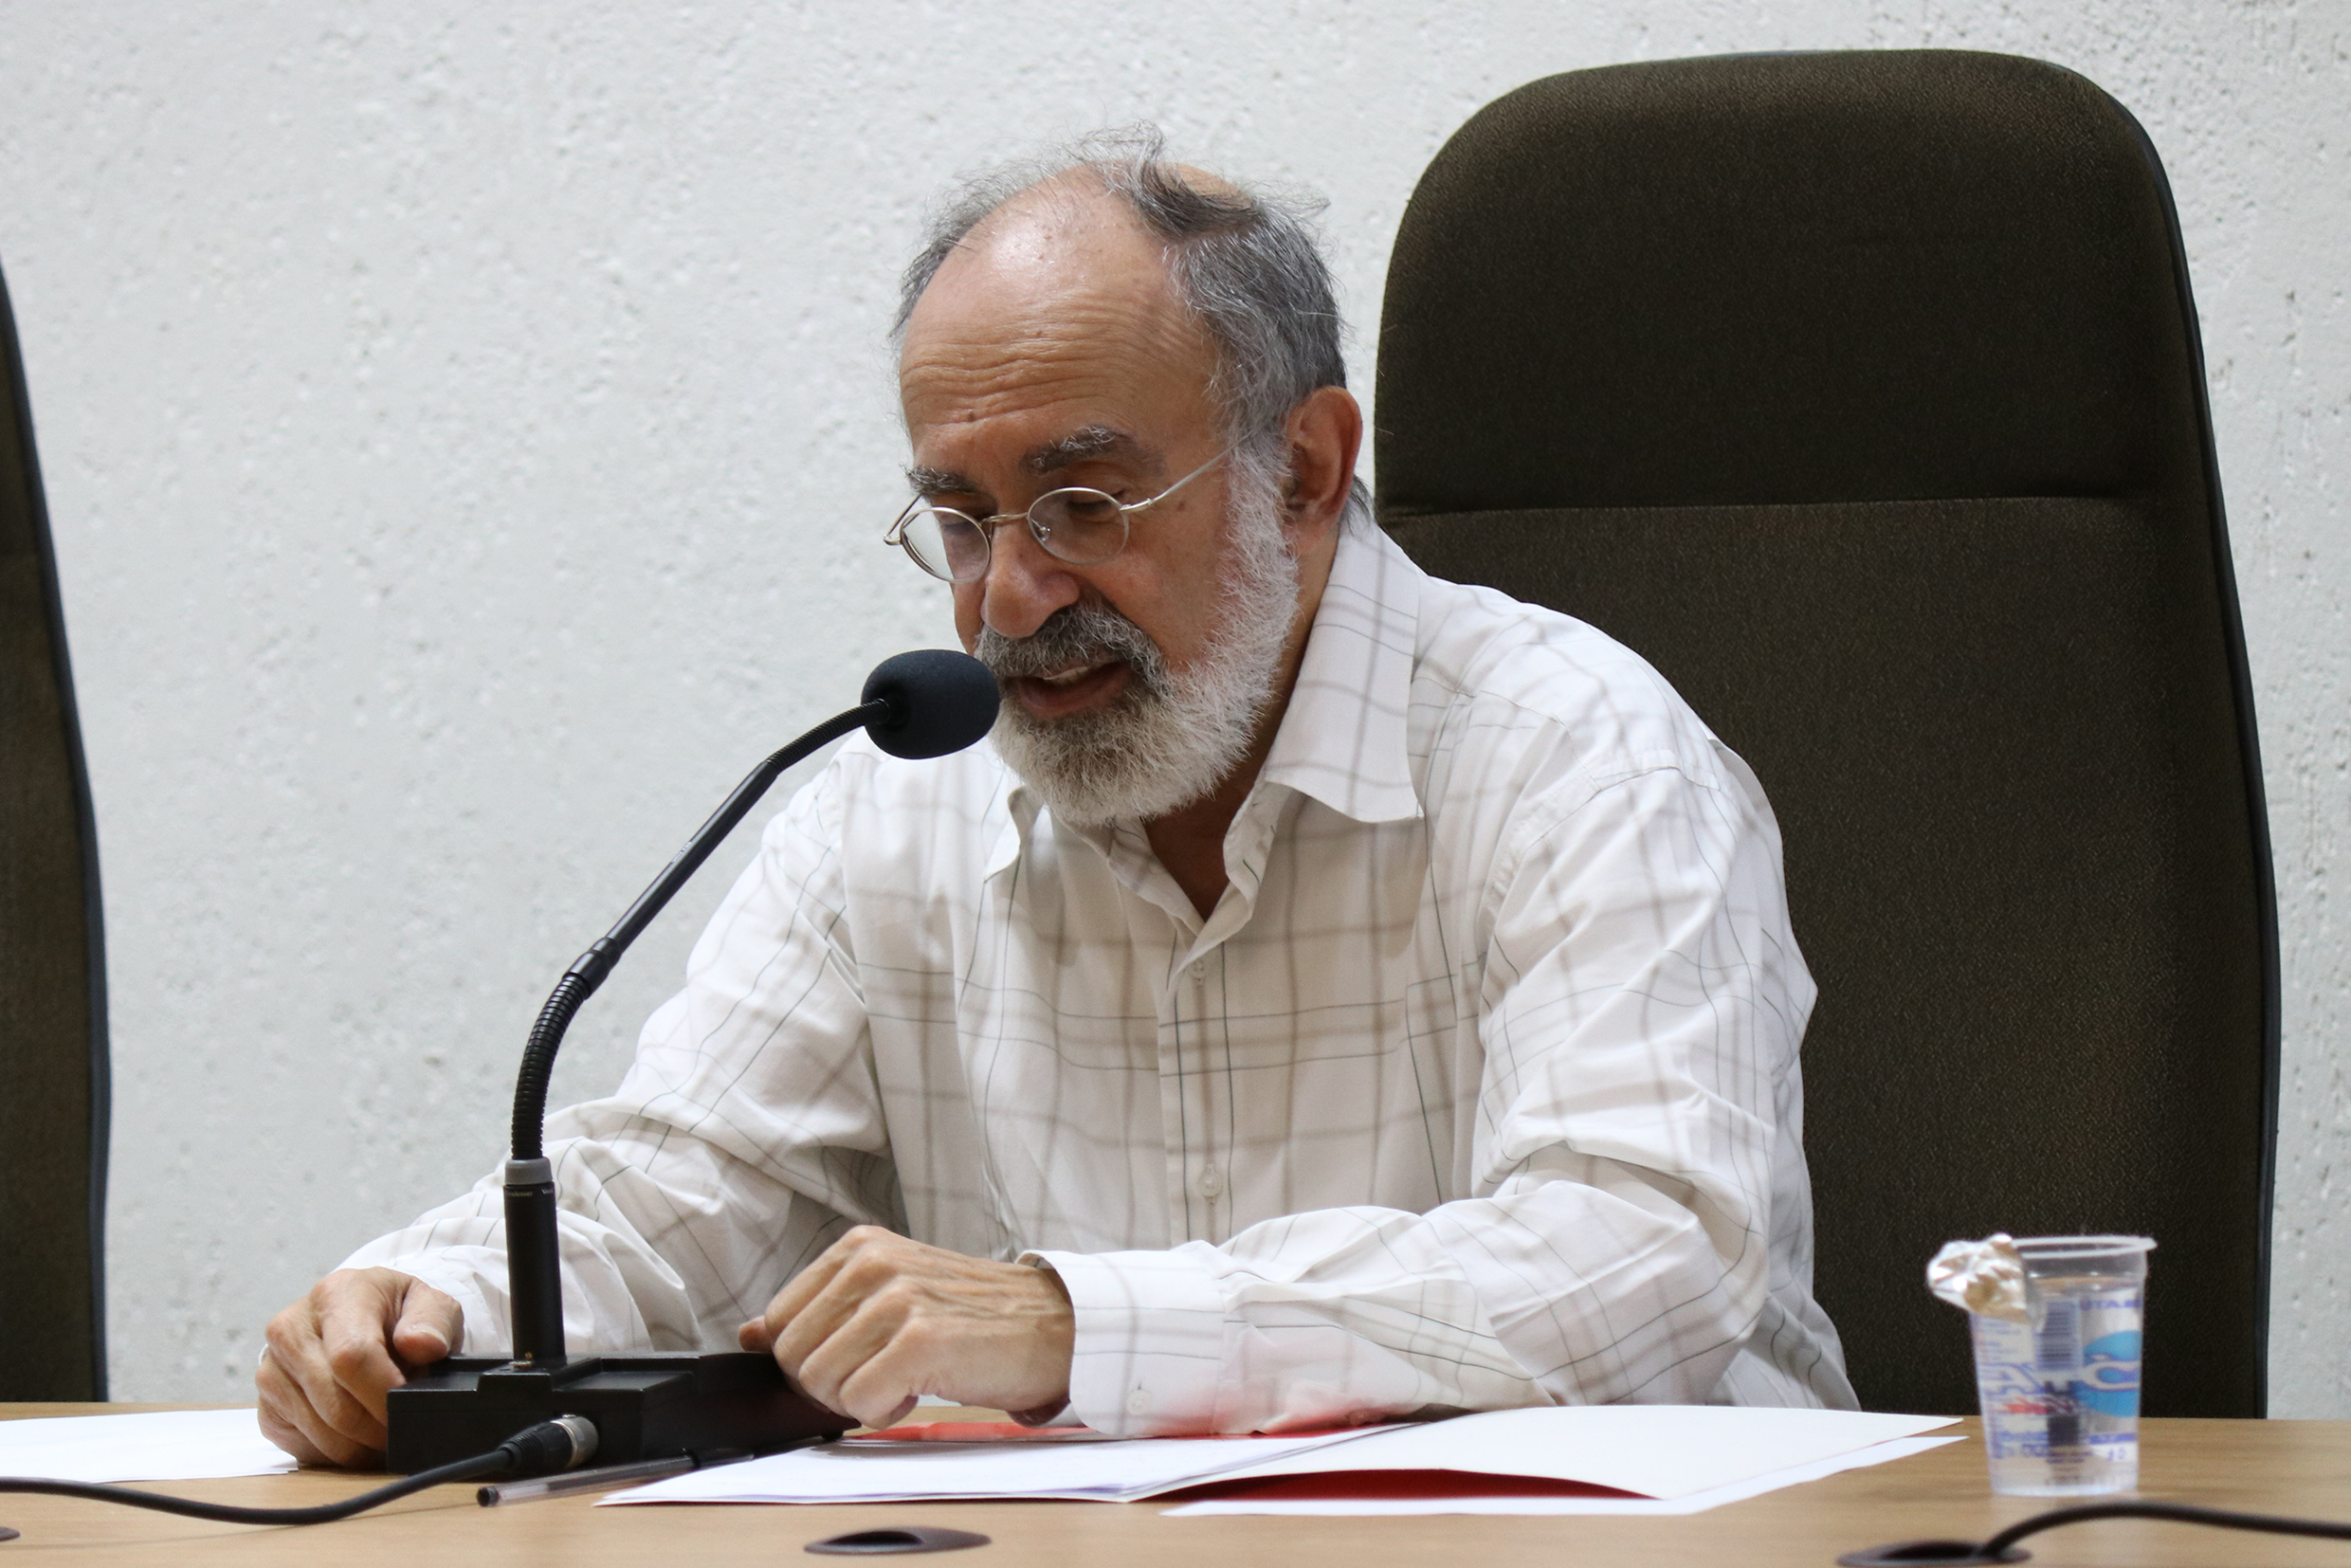 Guilherme Ary Plonski